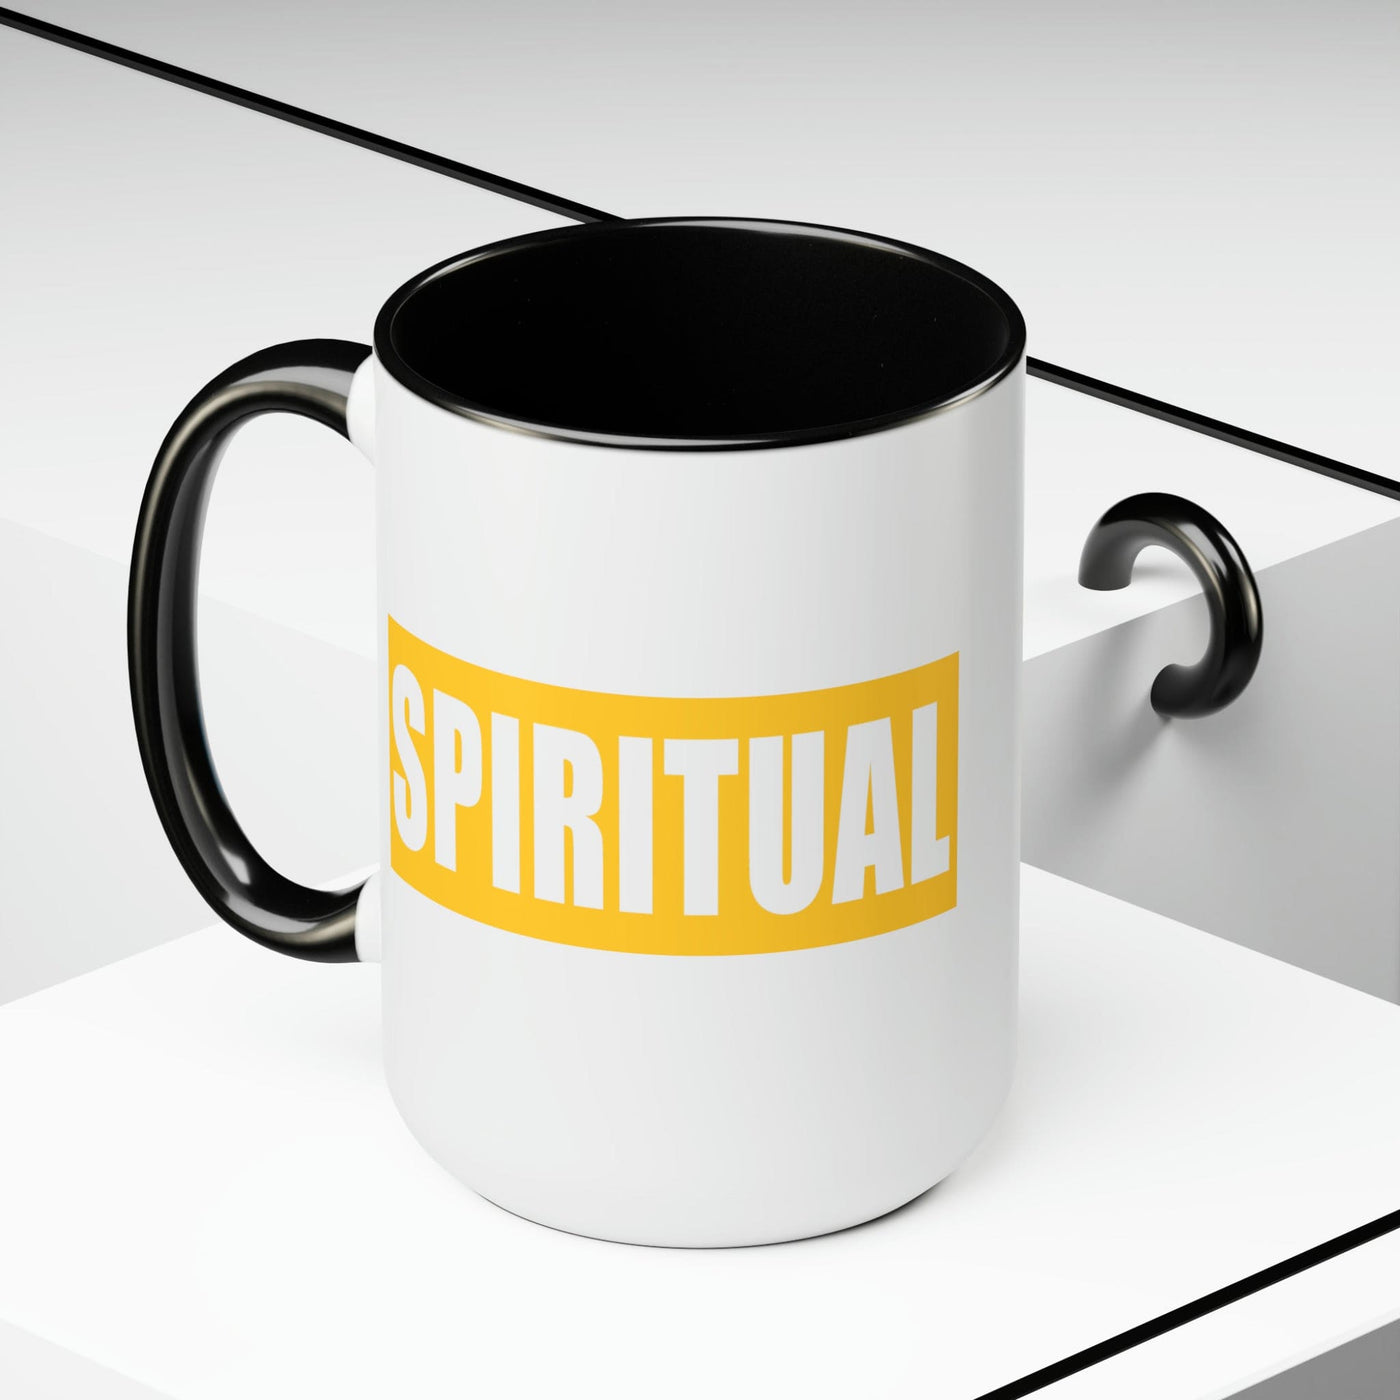 Accent Ceramic Coffee Mug 15oz - Spiritual Yellow Gold Colorblock Illustration